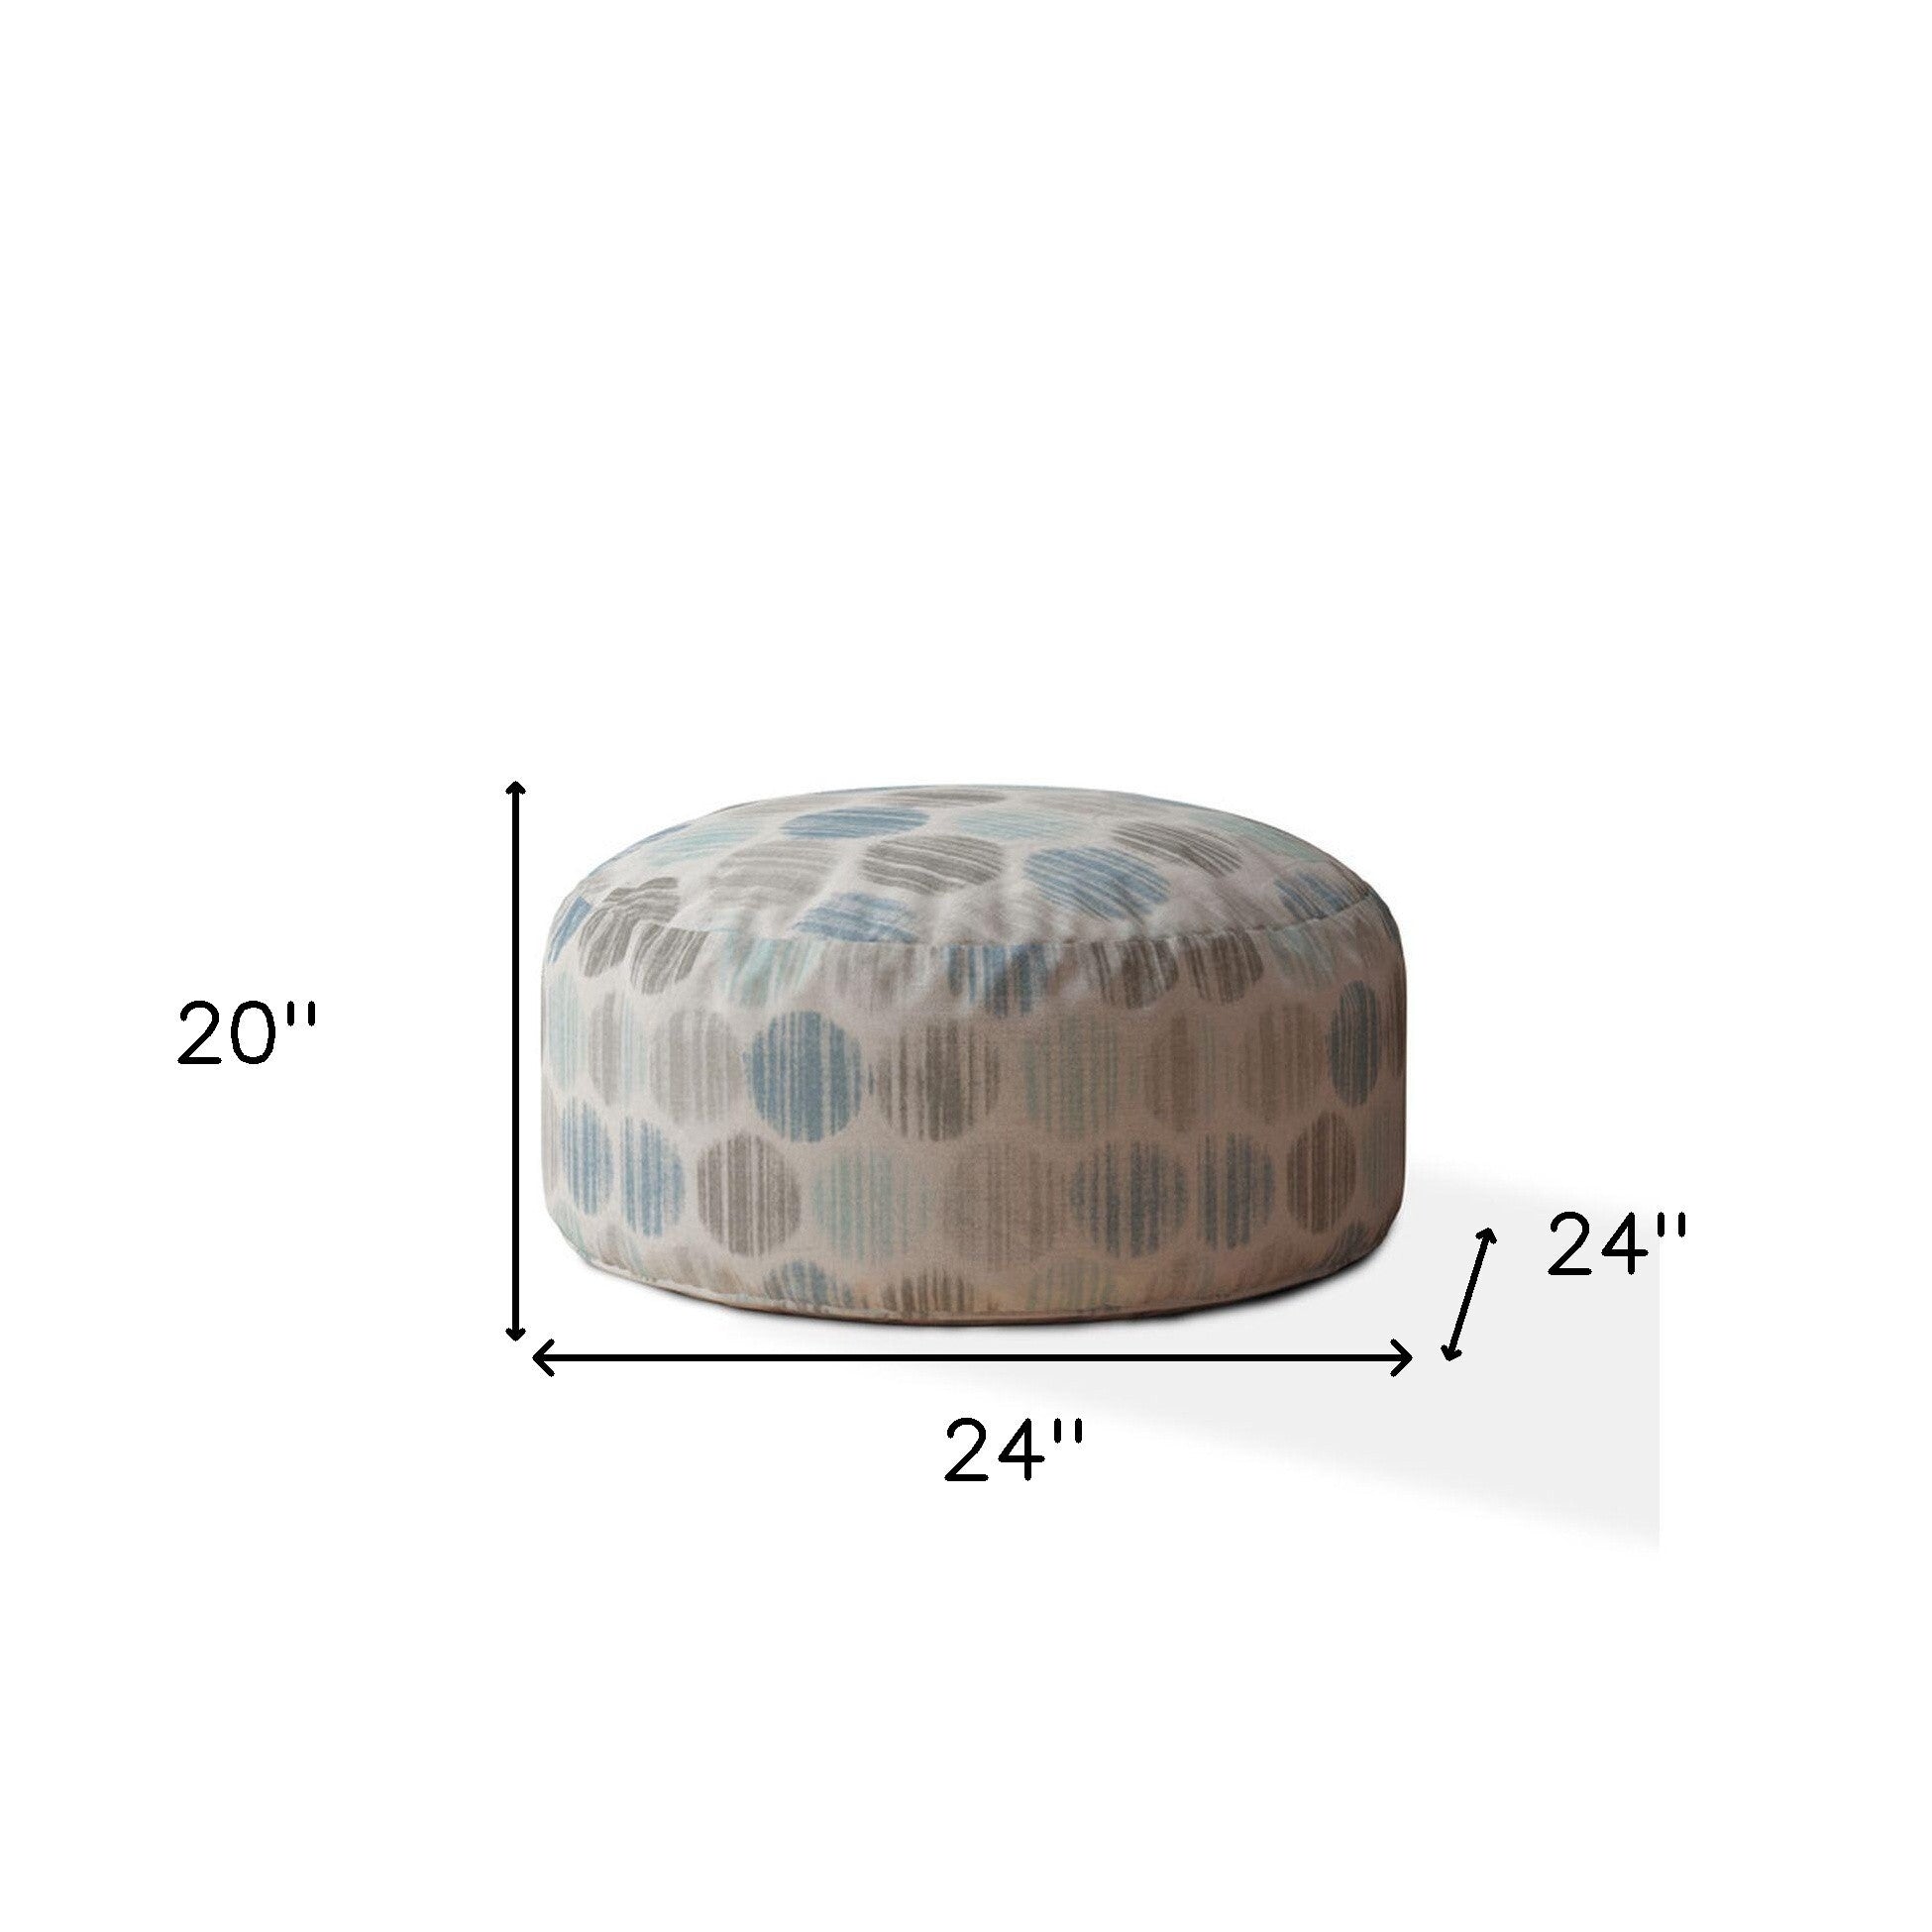 24" Blue Flax Round Polka Dots Pouf Ottoman